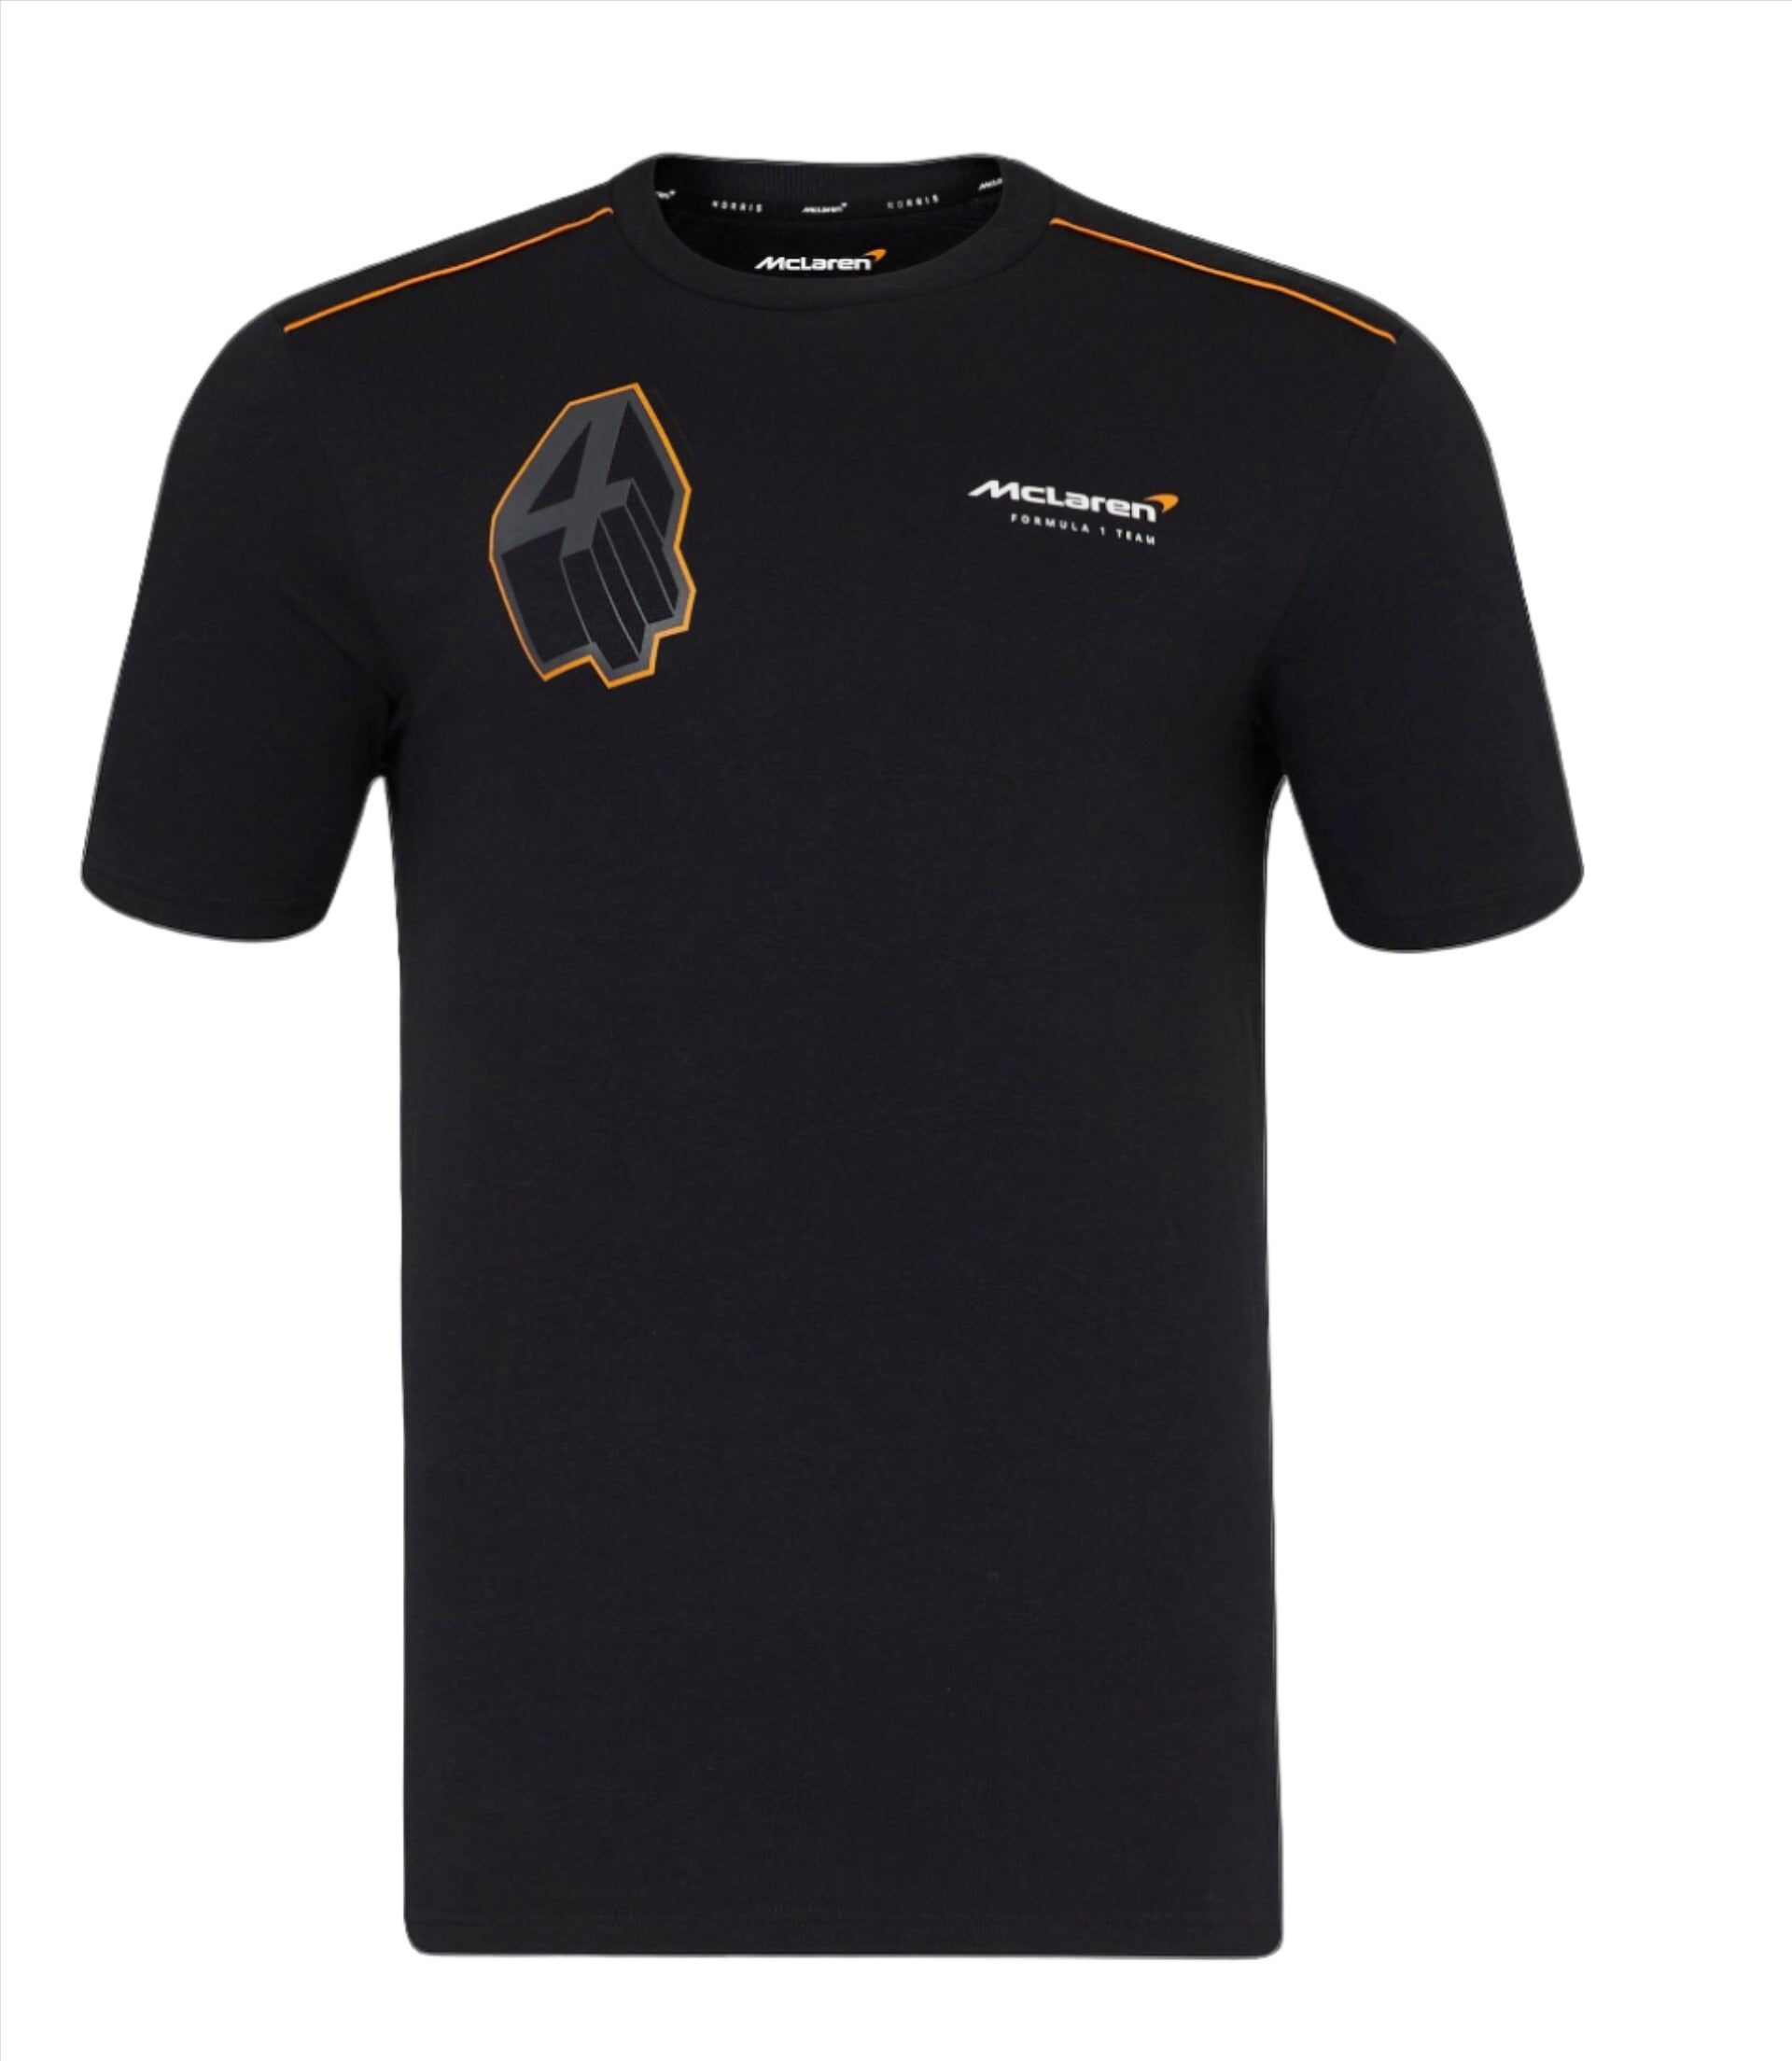 McLaren F1 Lando Norris Core Driver T-Shirt - Anthracite/White